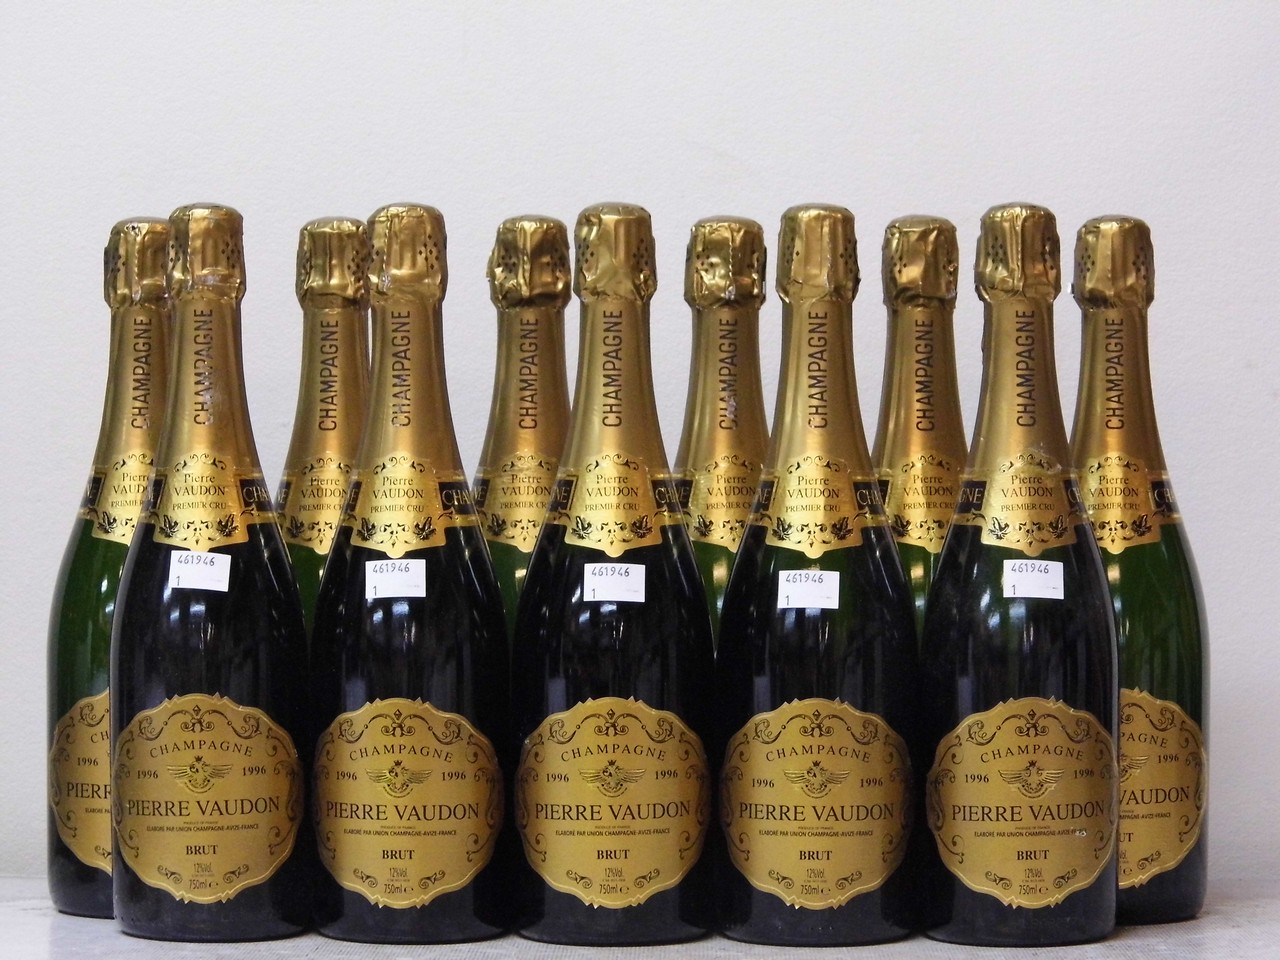 Champagne Pierre Vaudon 199611 bts OCC